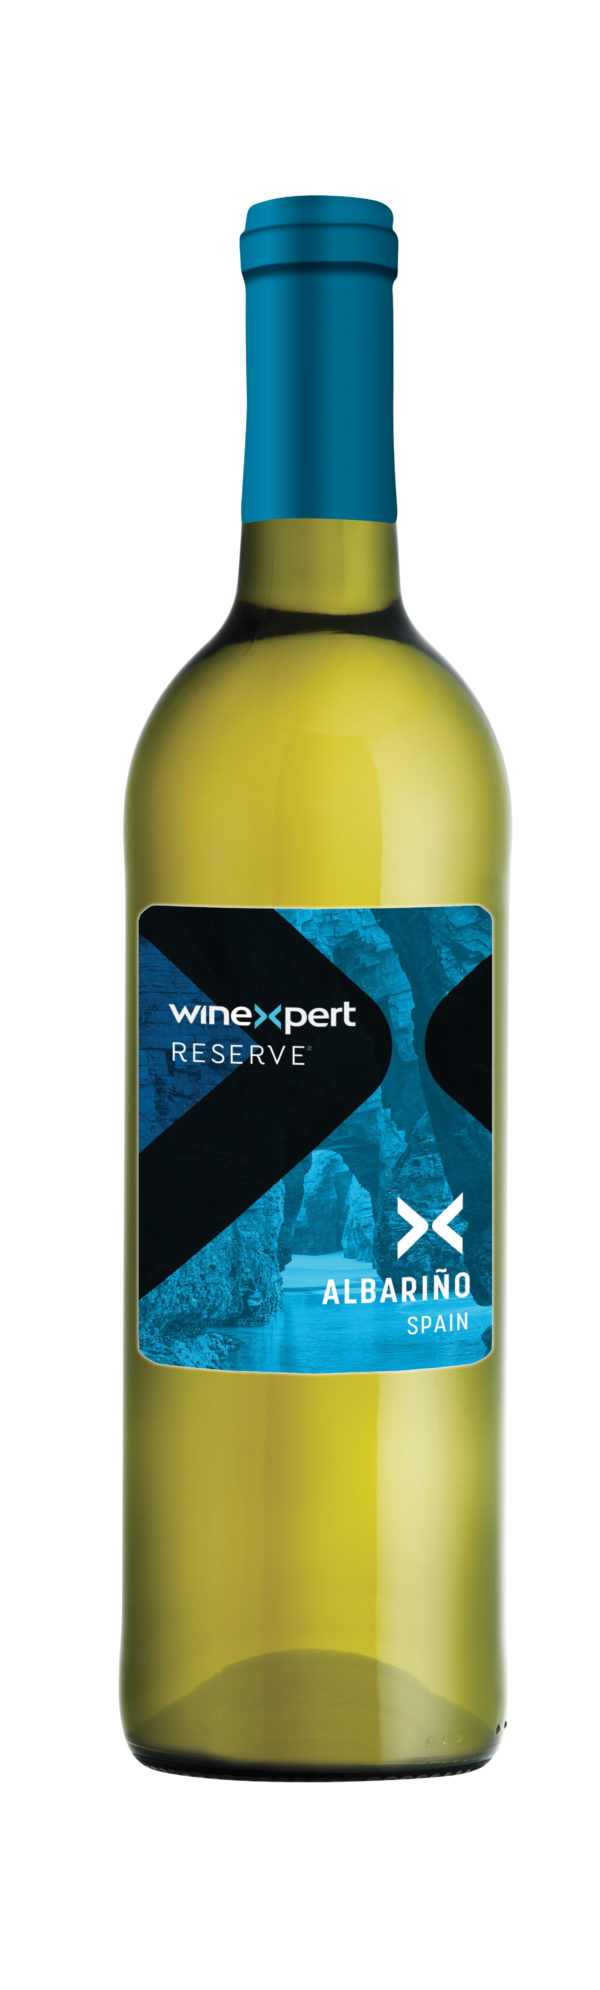 Winexpert Reserve Albariño